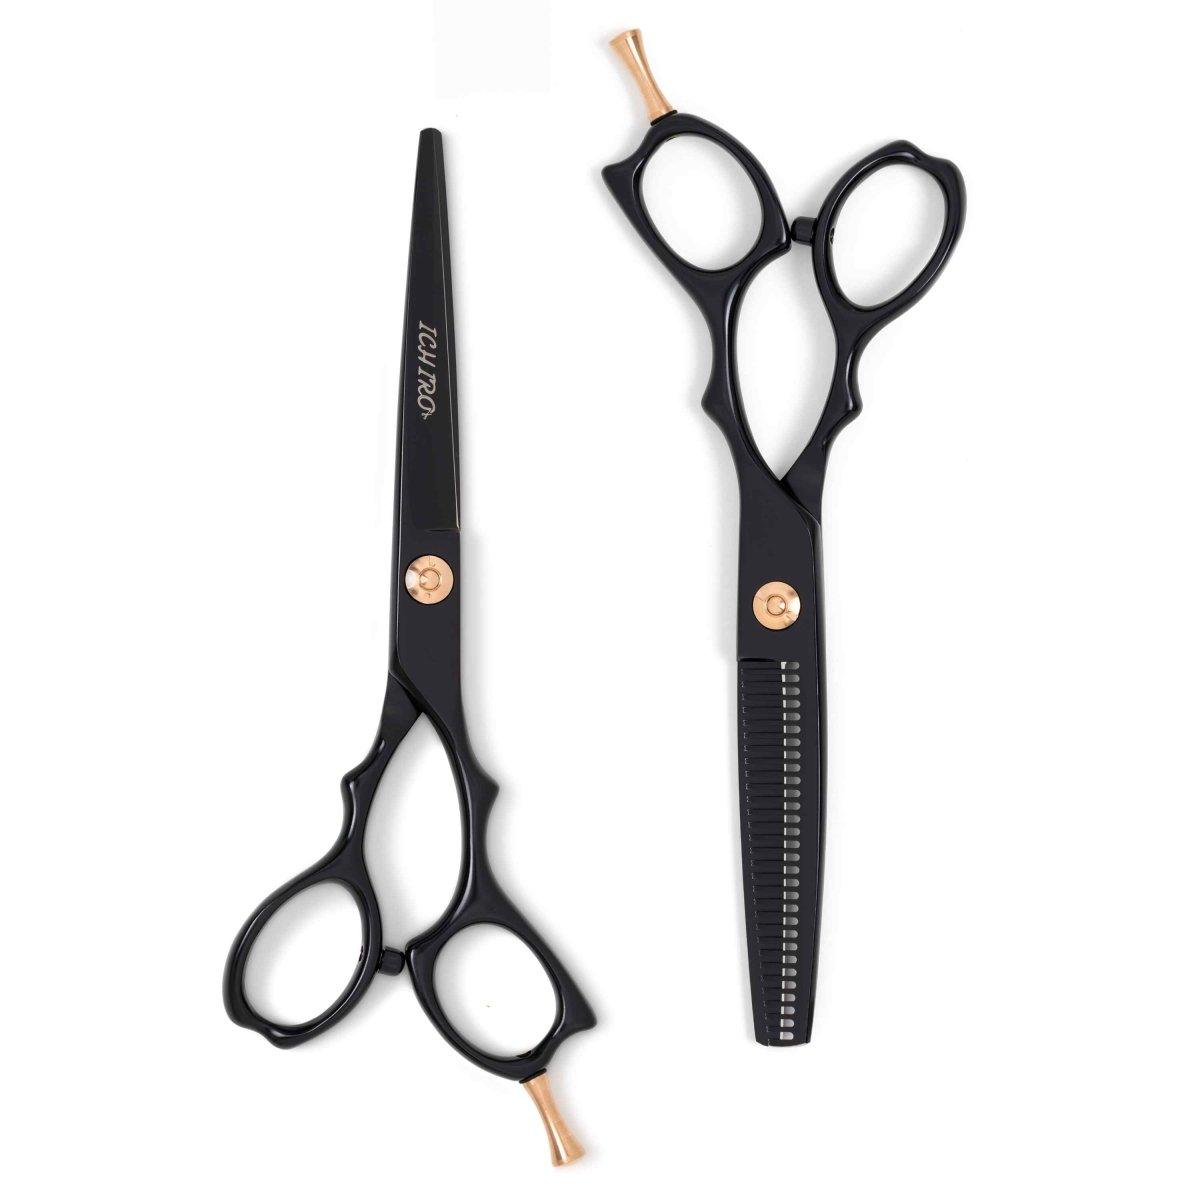 Edge 440c Barber Shears Good Quality Hair Scissors 7' Vg10 Japanese Scissors  - China Hair Scissors and Hair Thinning Scissors price